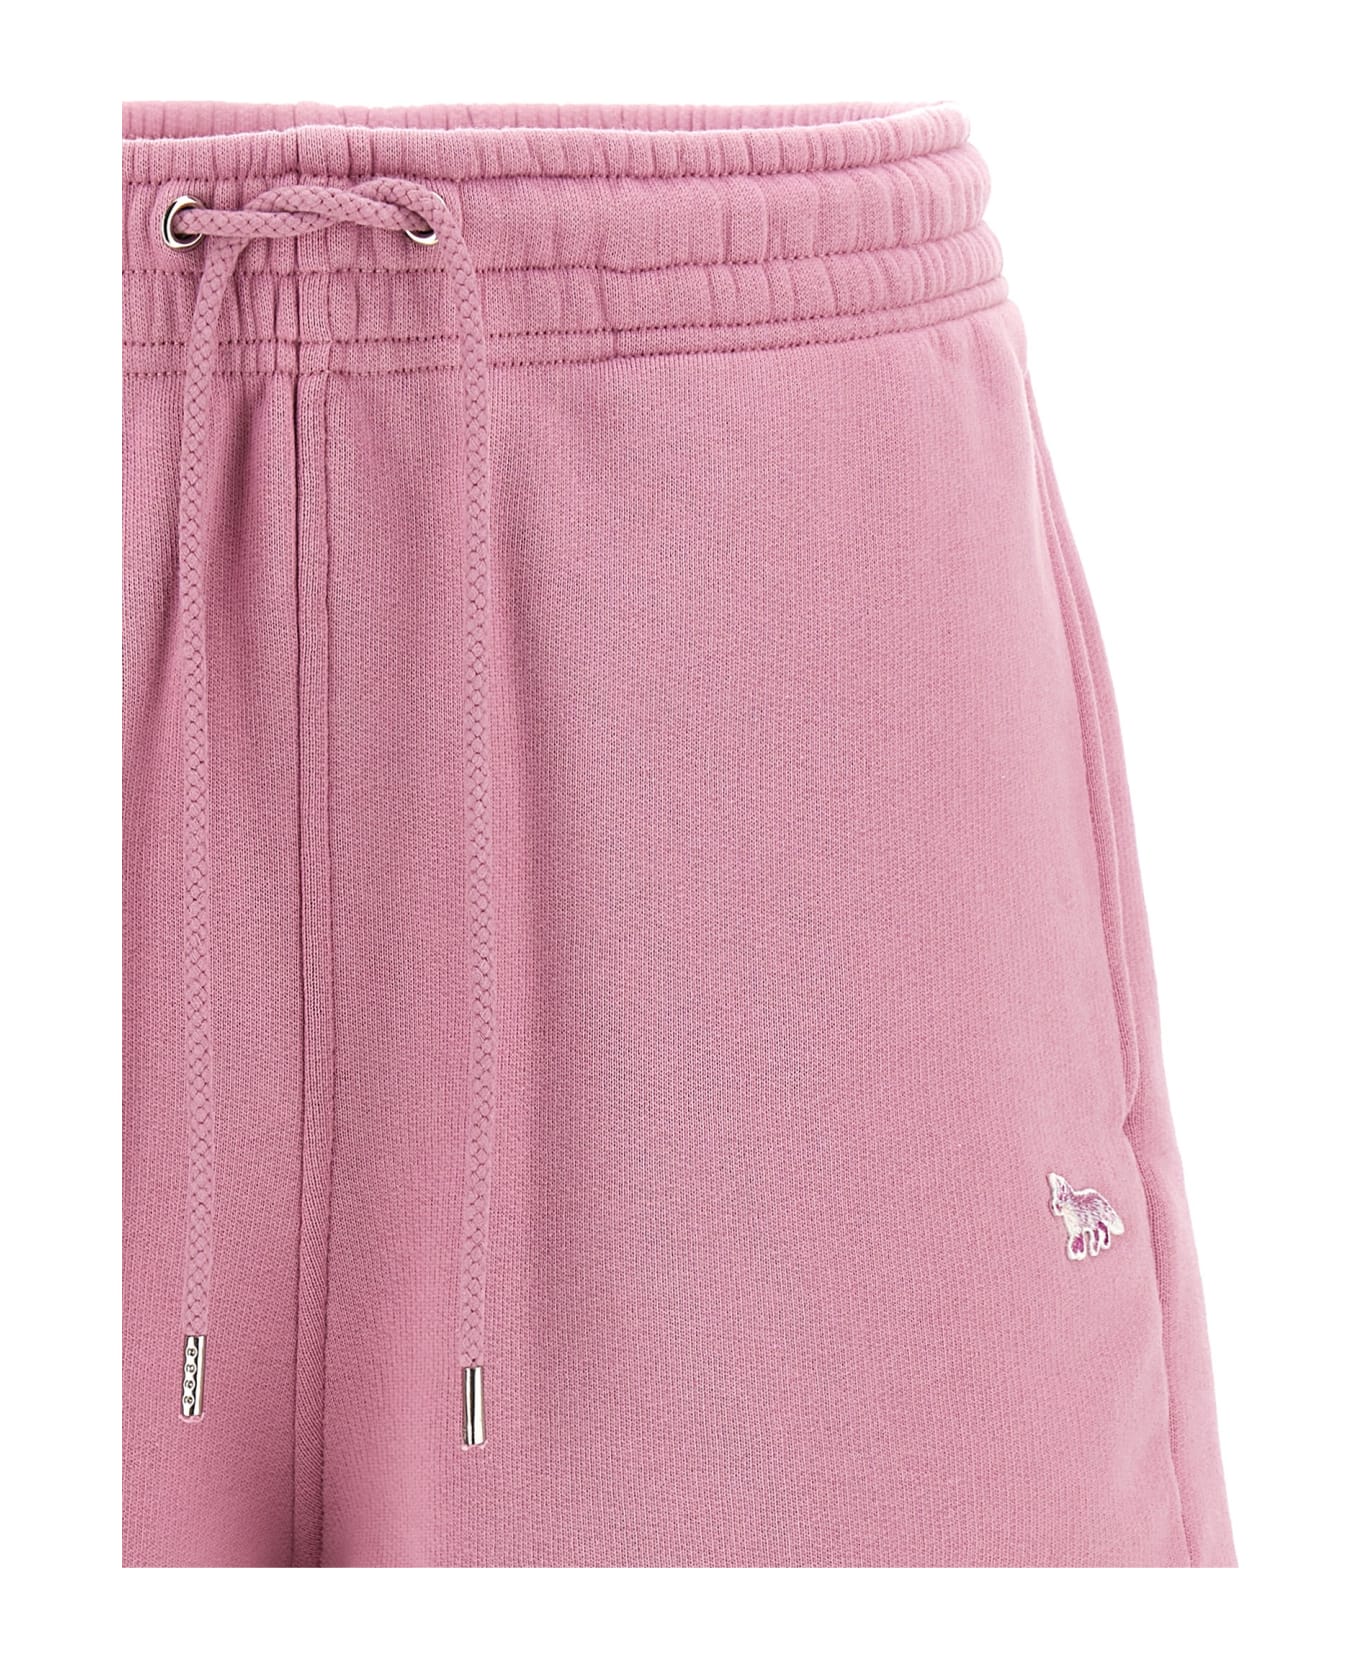 Maison Kitsuné 'baby Fox' Shorts - Pink